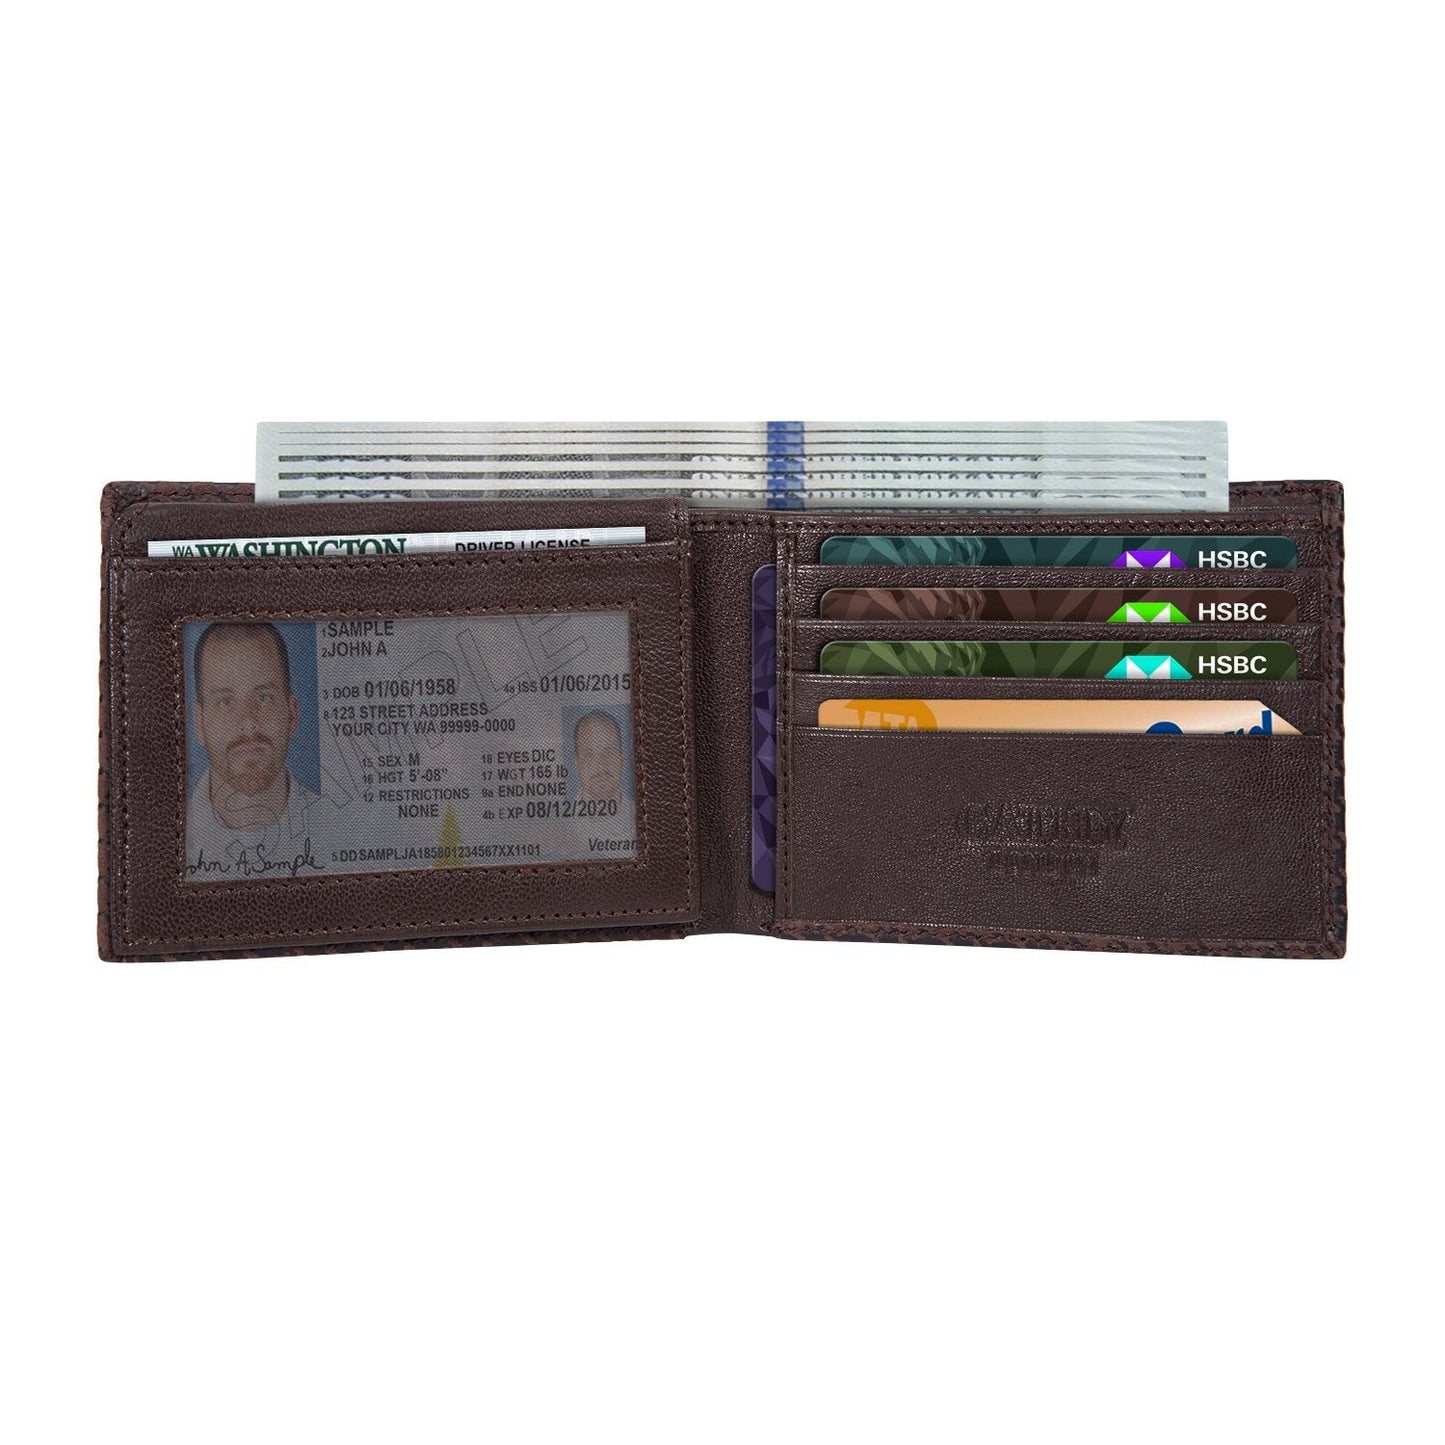 Brown Colour Bi-Fold Italian Leather Slim Wallet ( 8 Card Slot + 2 Hidden Compartment + 1 ID Slot+ Cash Compartment )